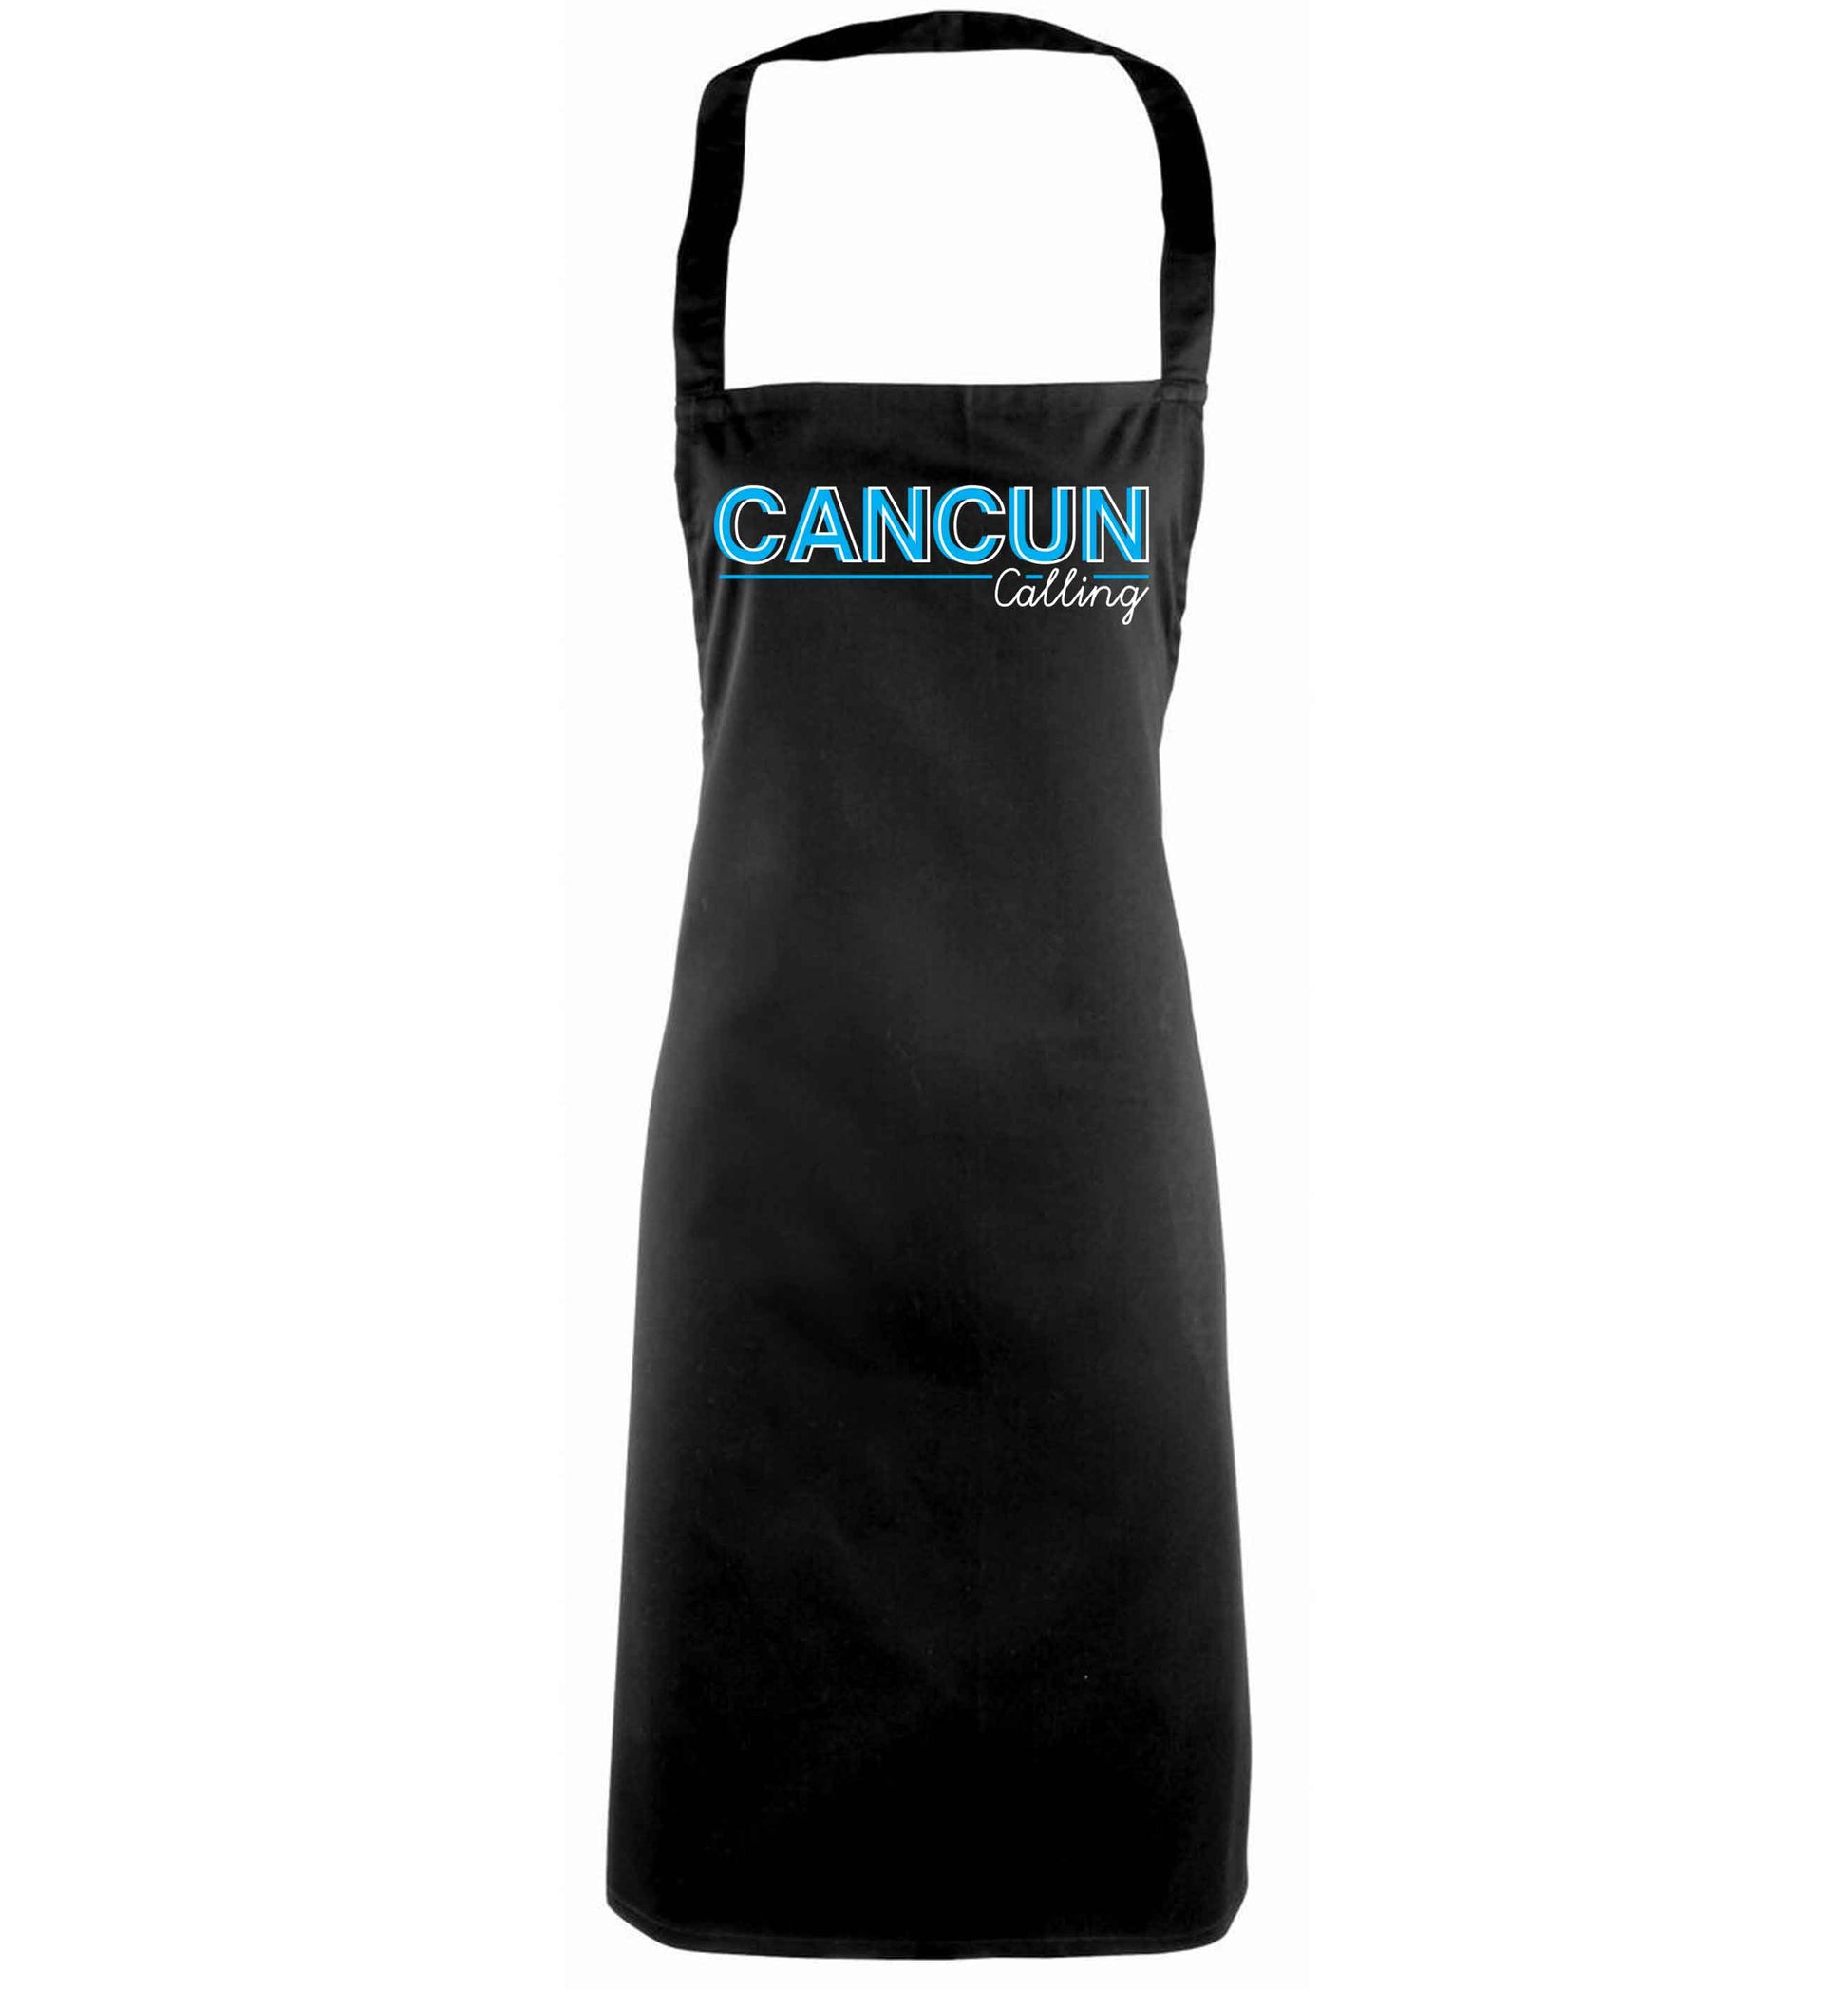 Cancun calling black apron